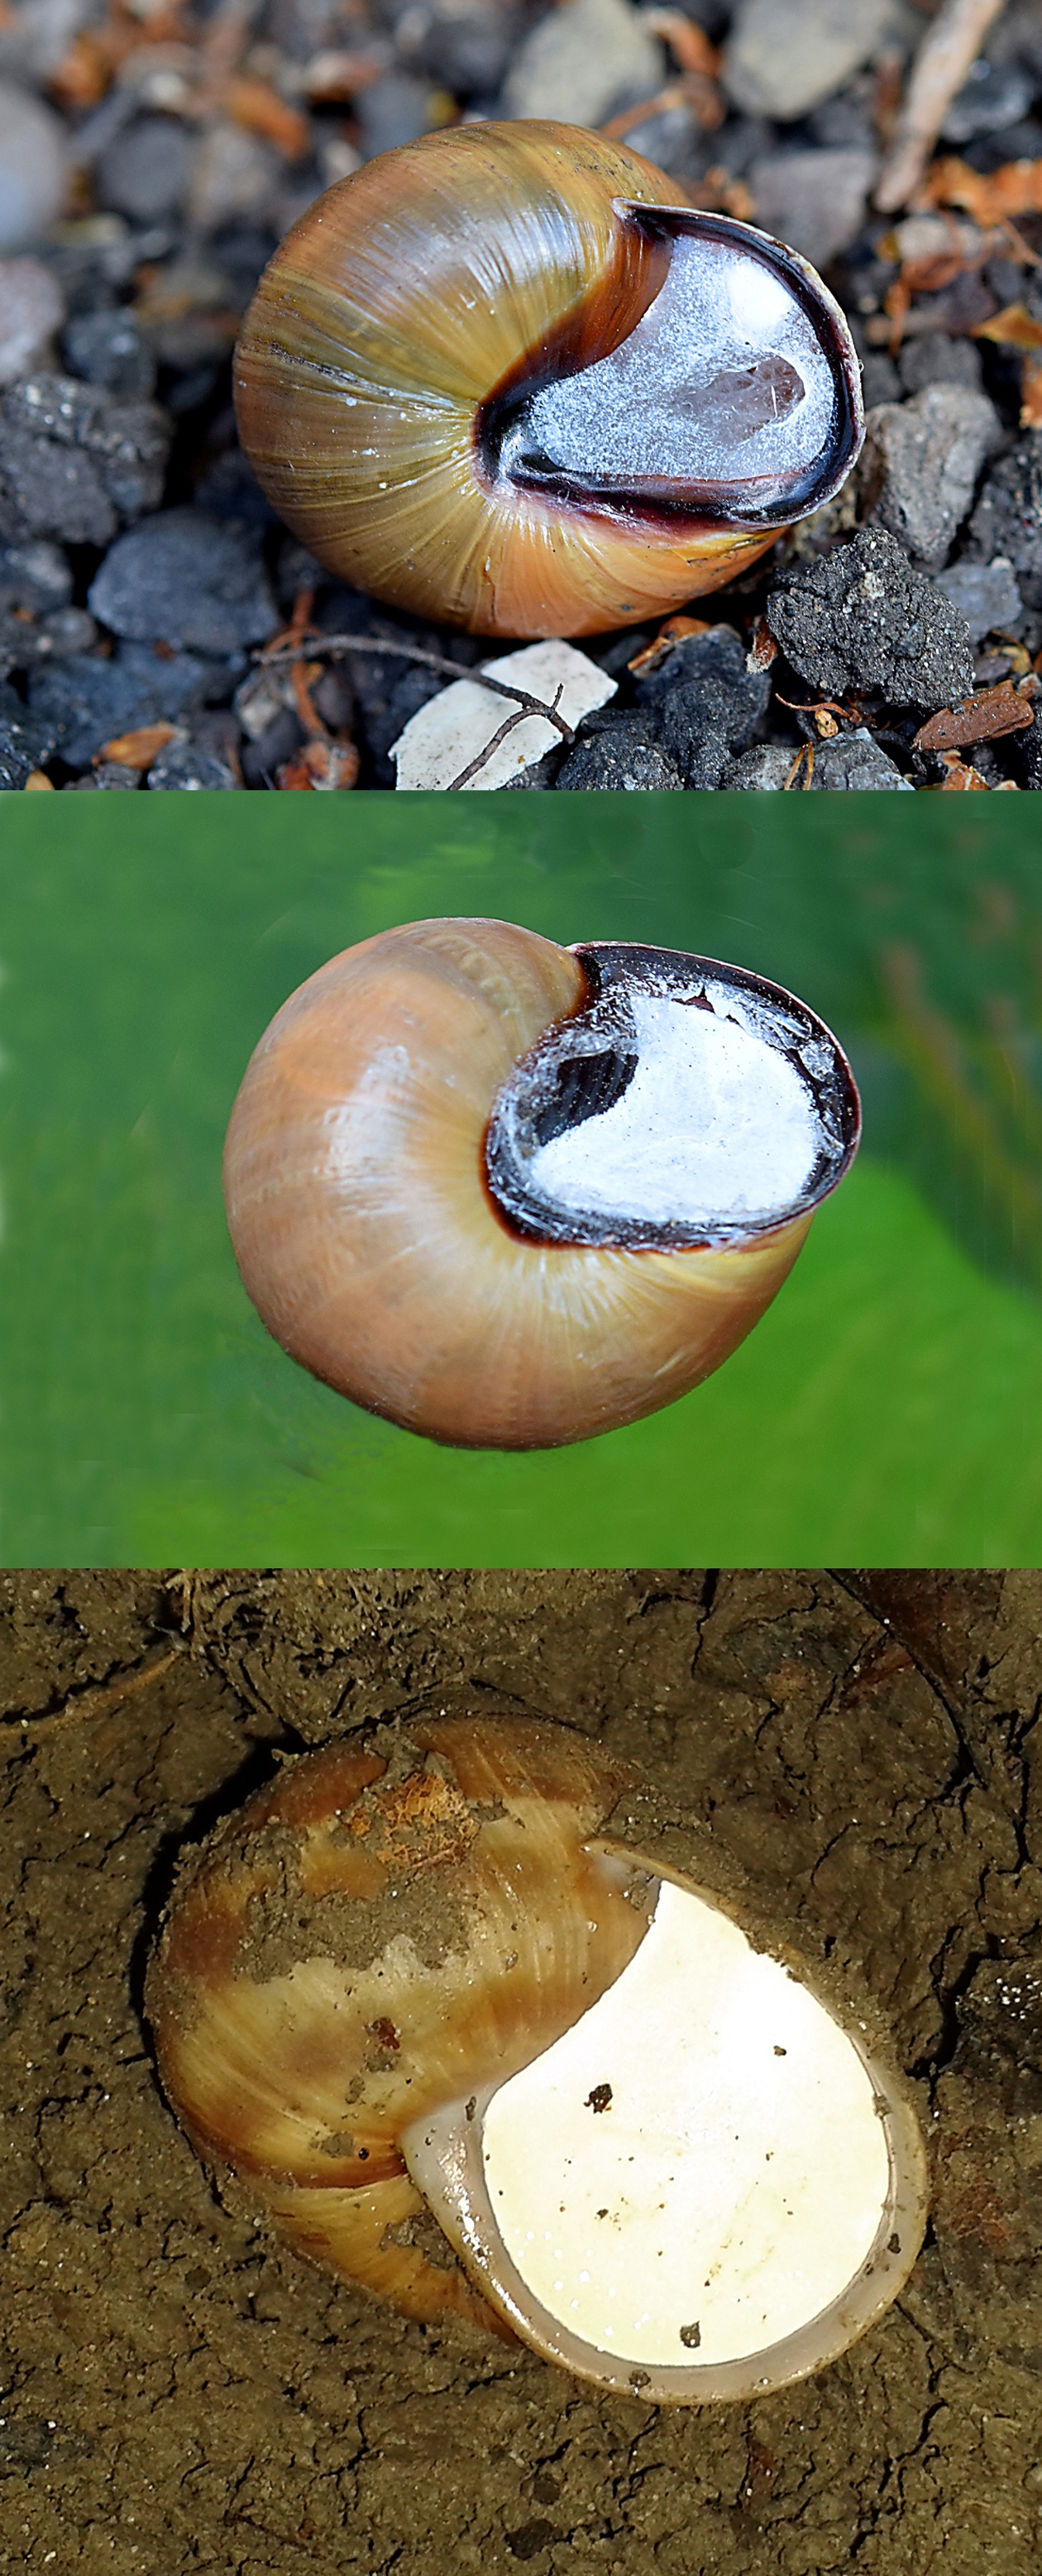 Do snails hibernate in aquariums?